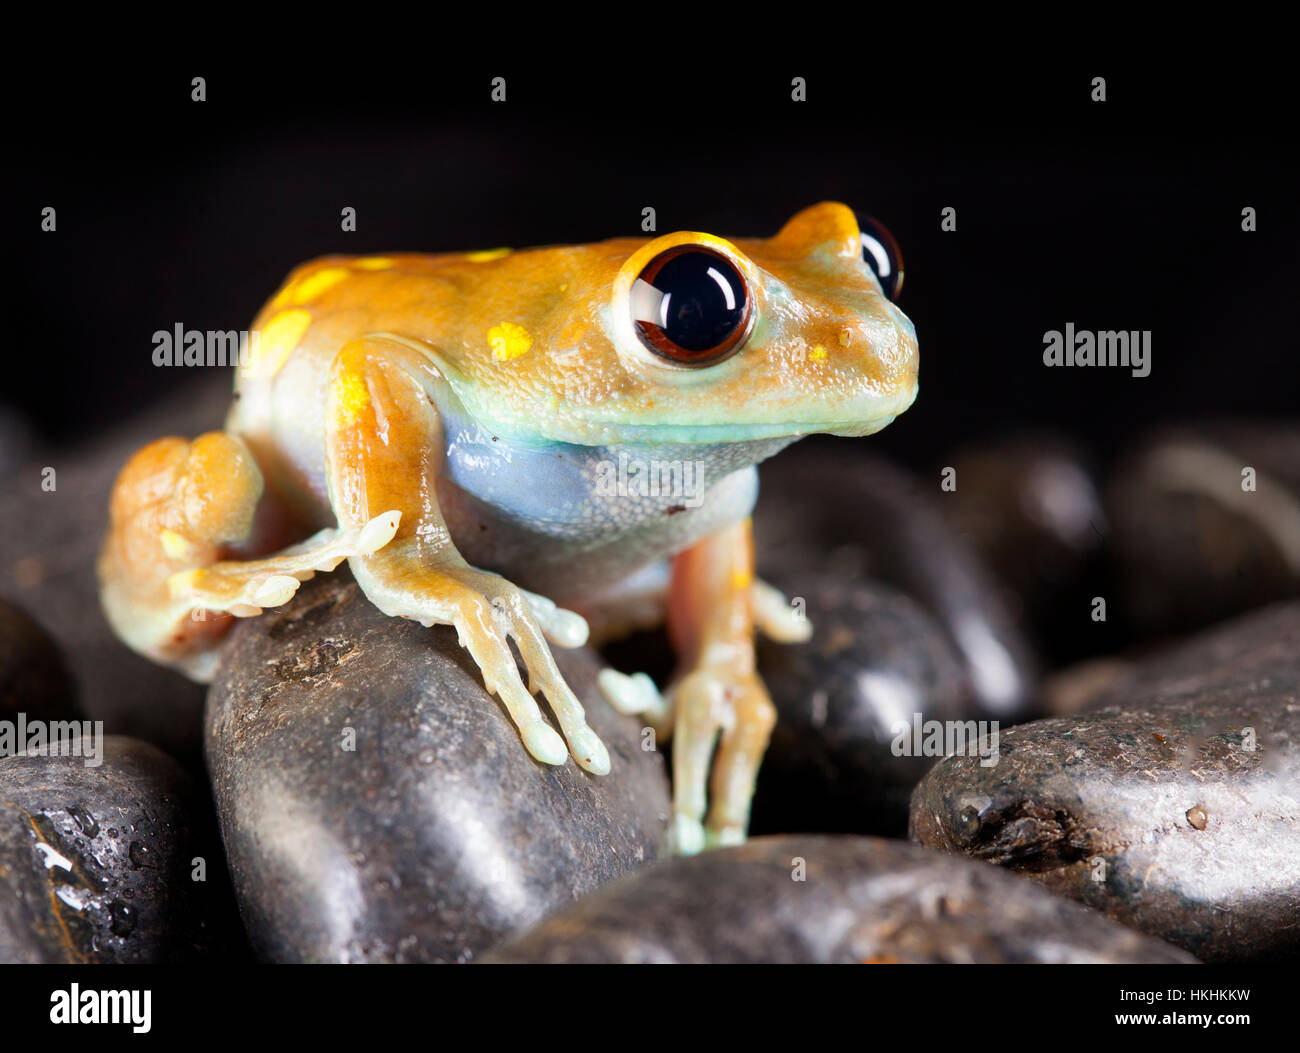 Leptopelis Uluguruensis frog in studio with black background Stock Photo